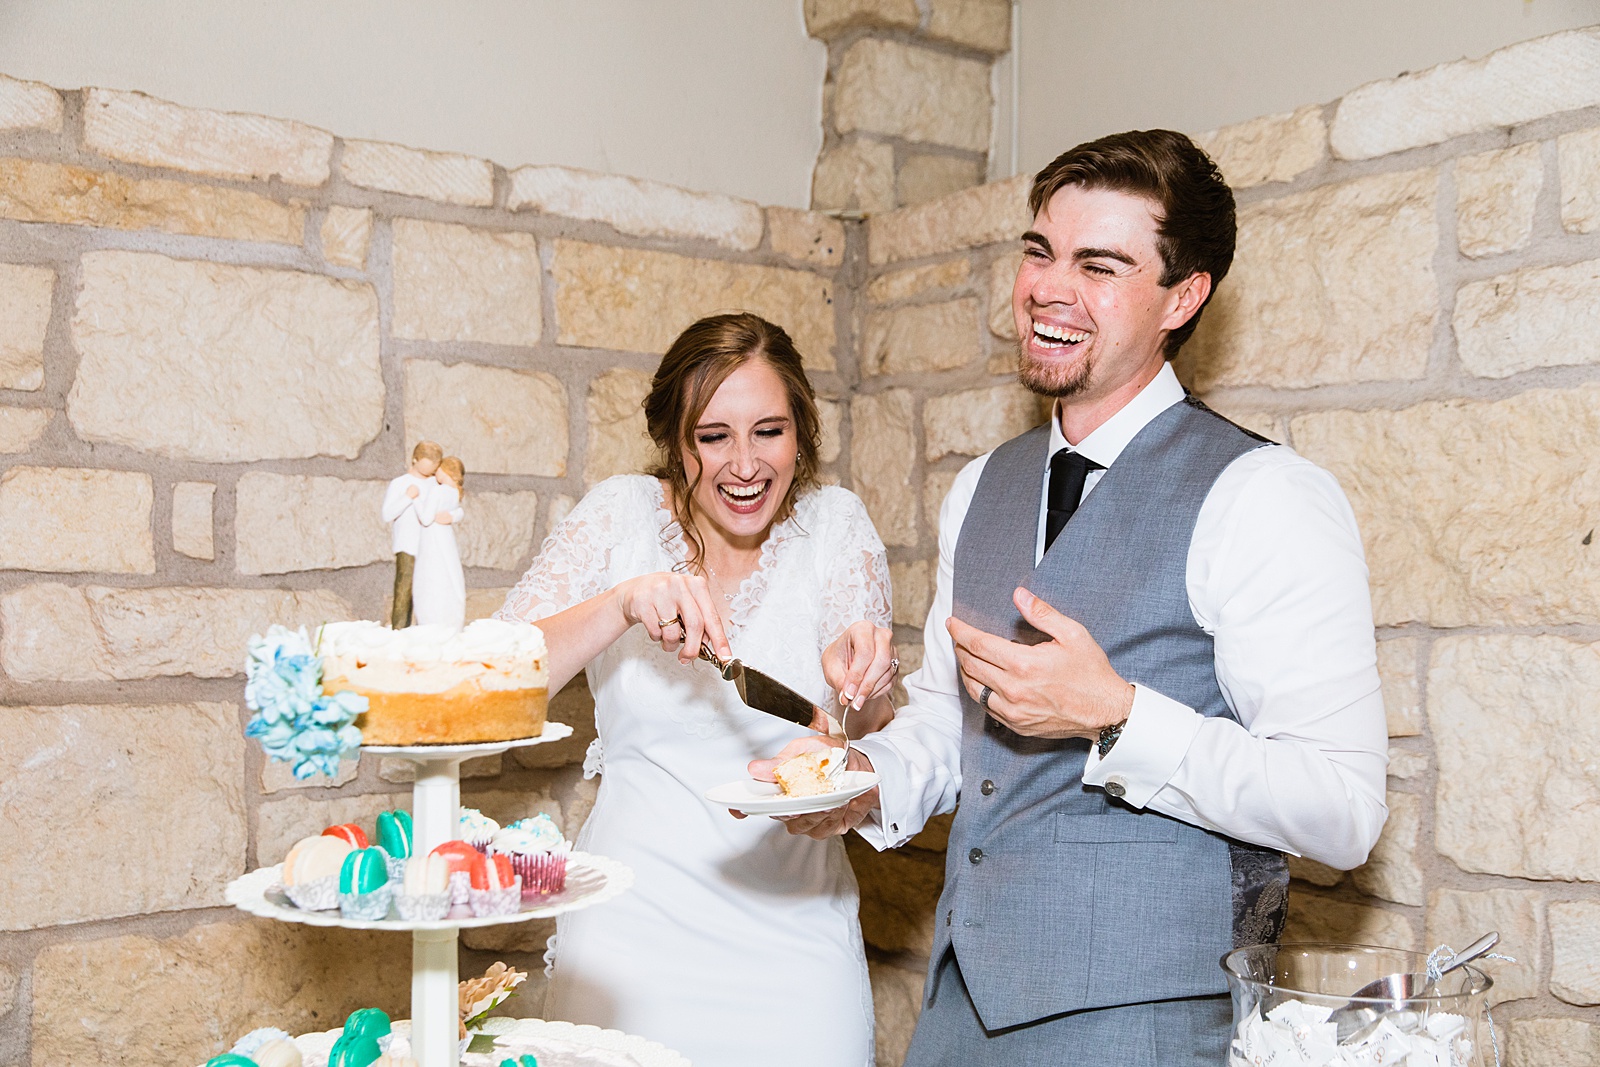 Newlyweds cutting their wedding cake at their Ocotillo Oasis wedding reception by Arizona wedding photographer PMA Photography.